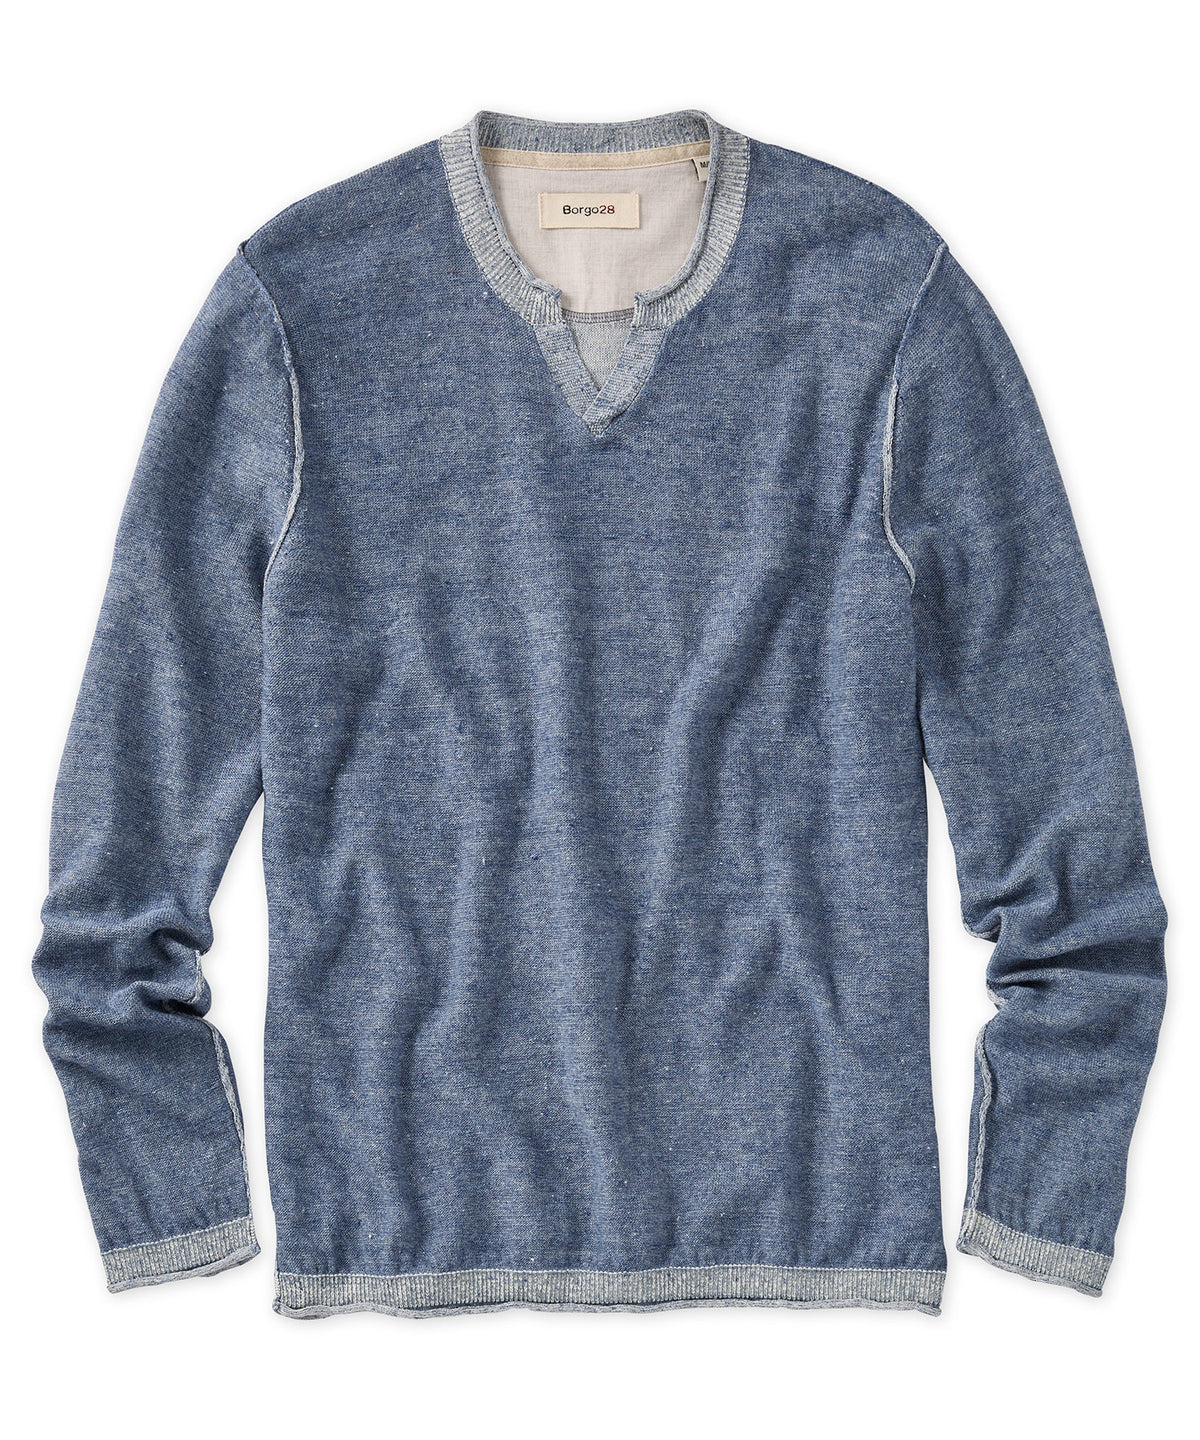 Cotton-Linen Notch Neck Sweater